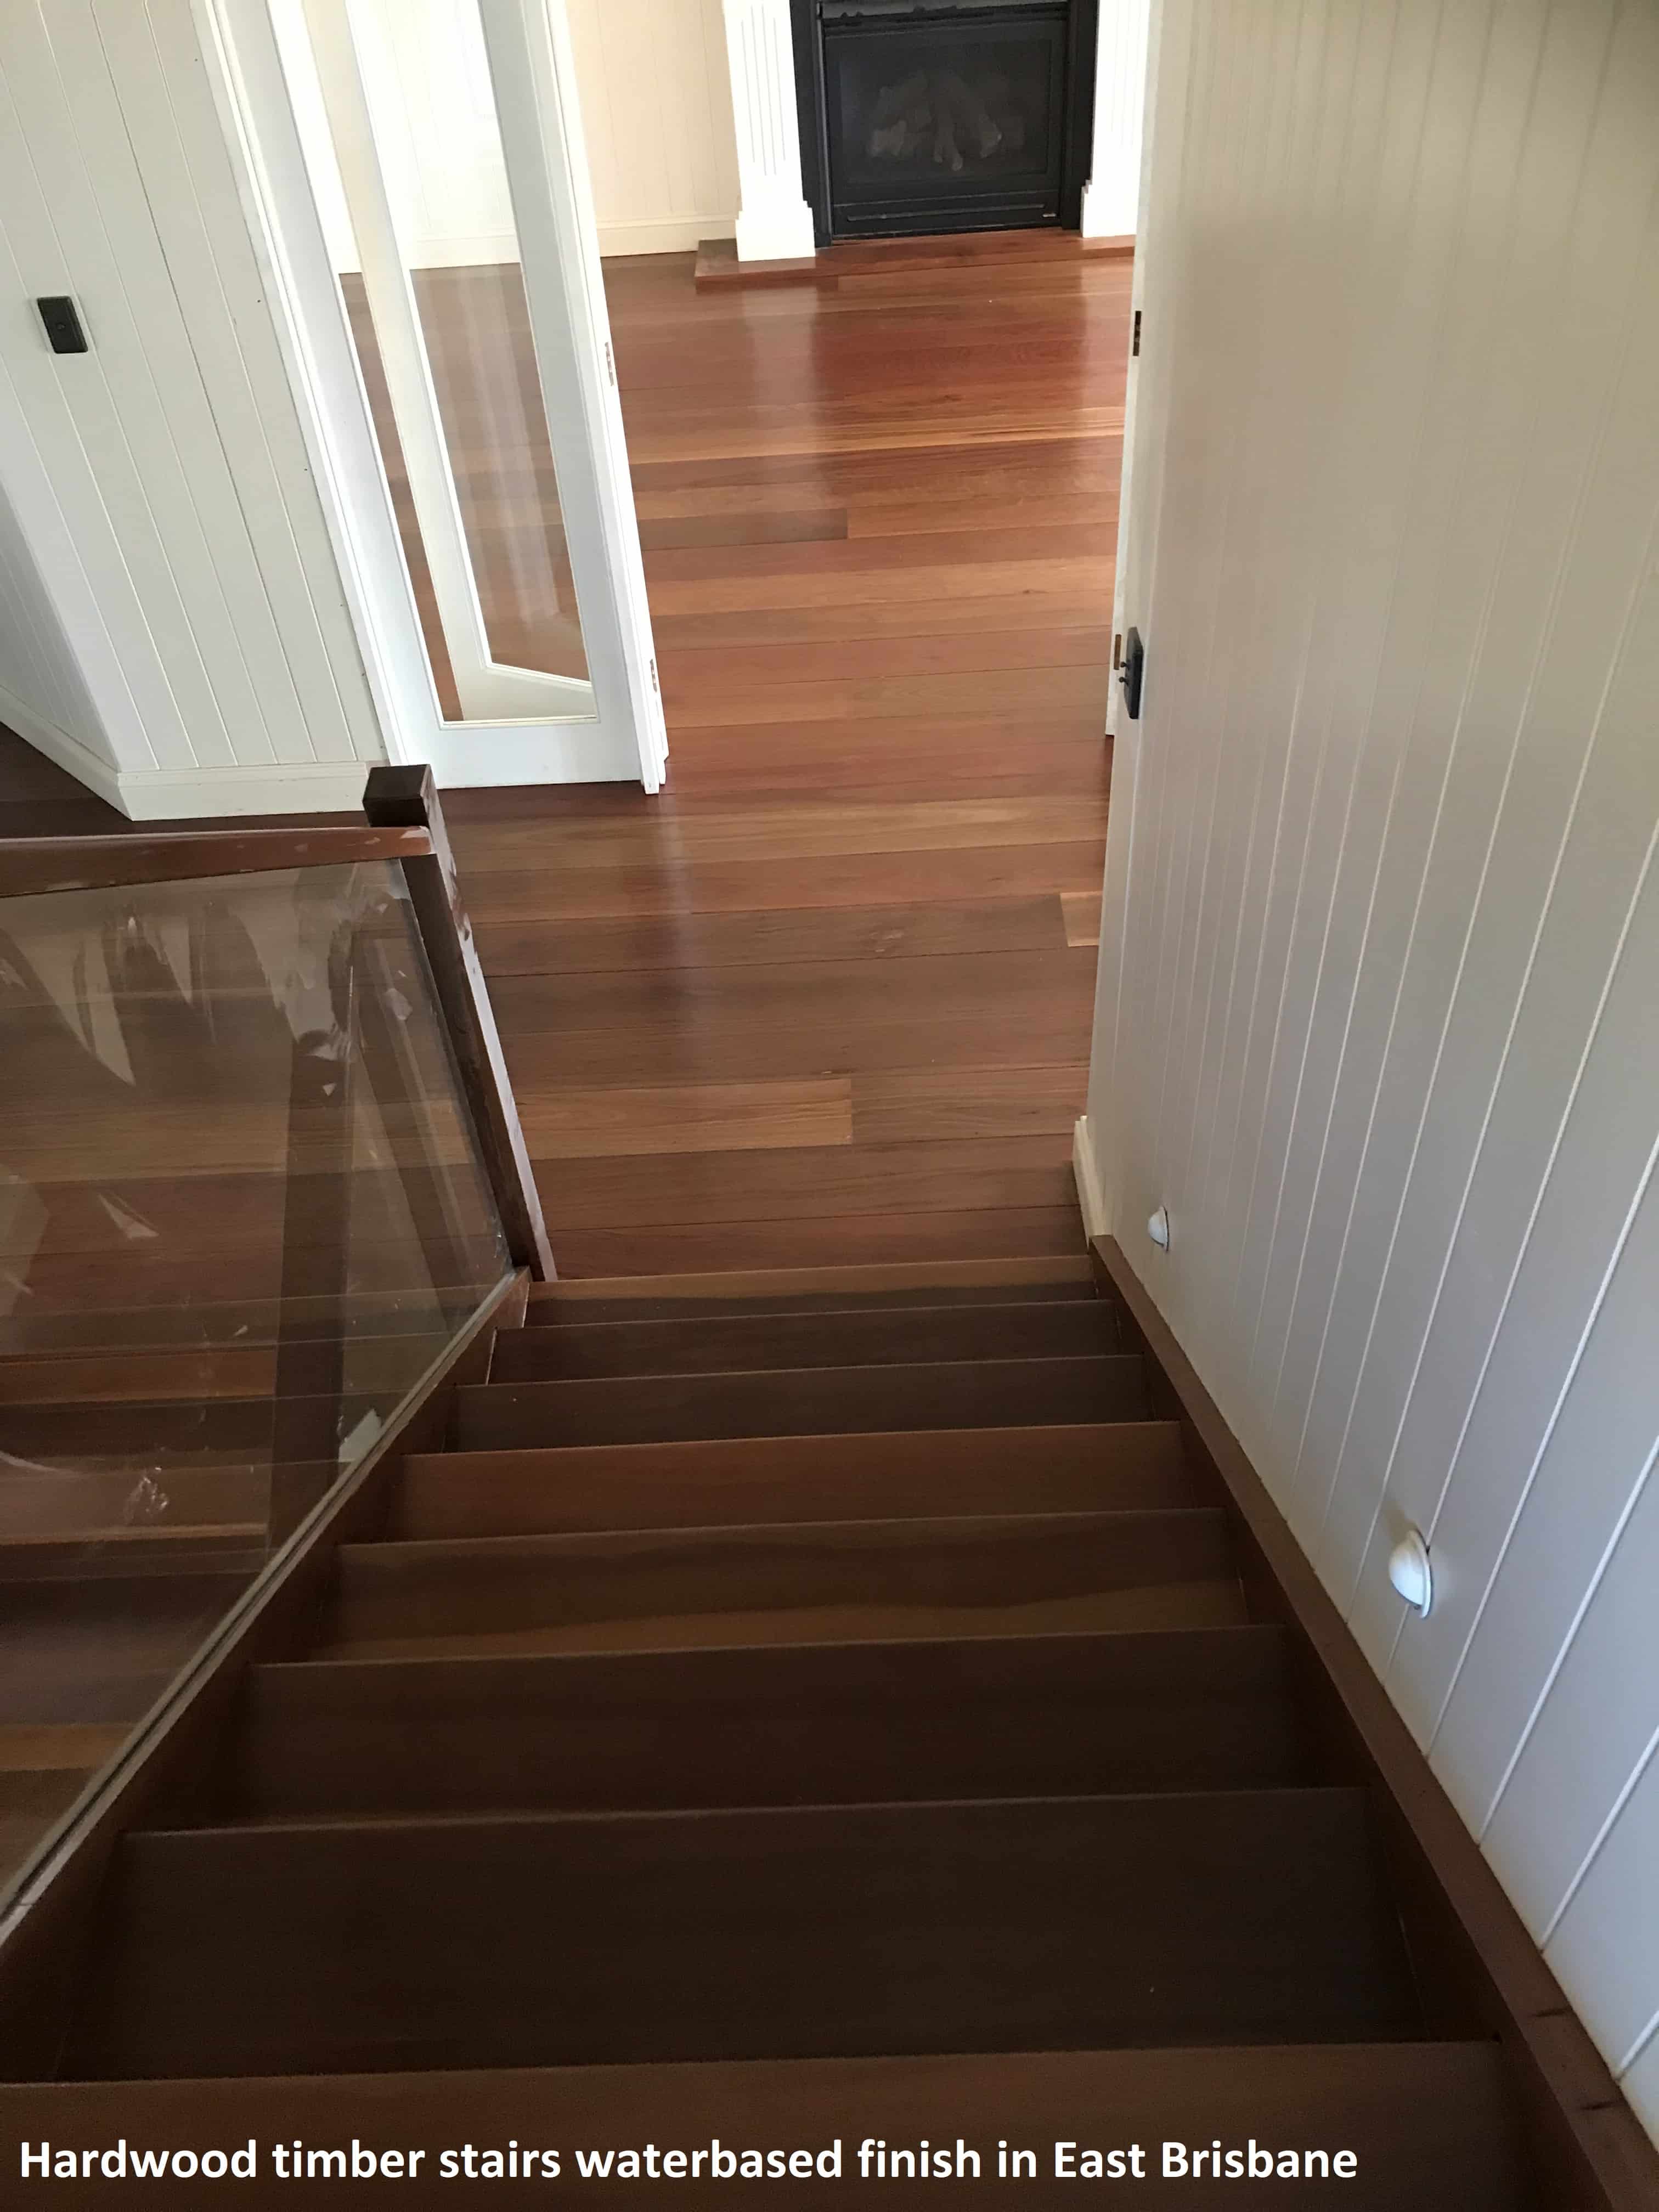 Hardwood timber stairs waterbased finish in East Brisbane